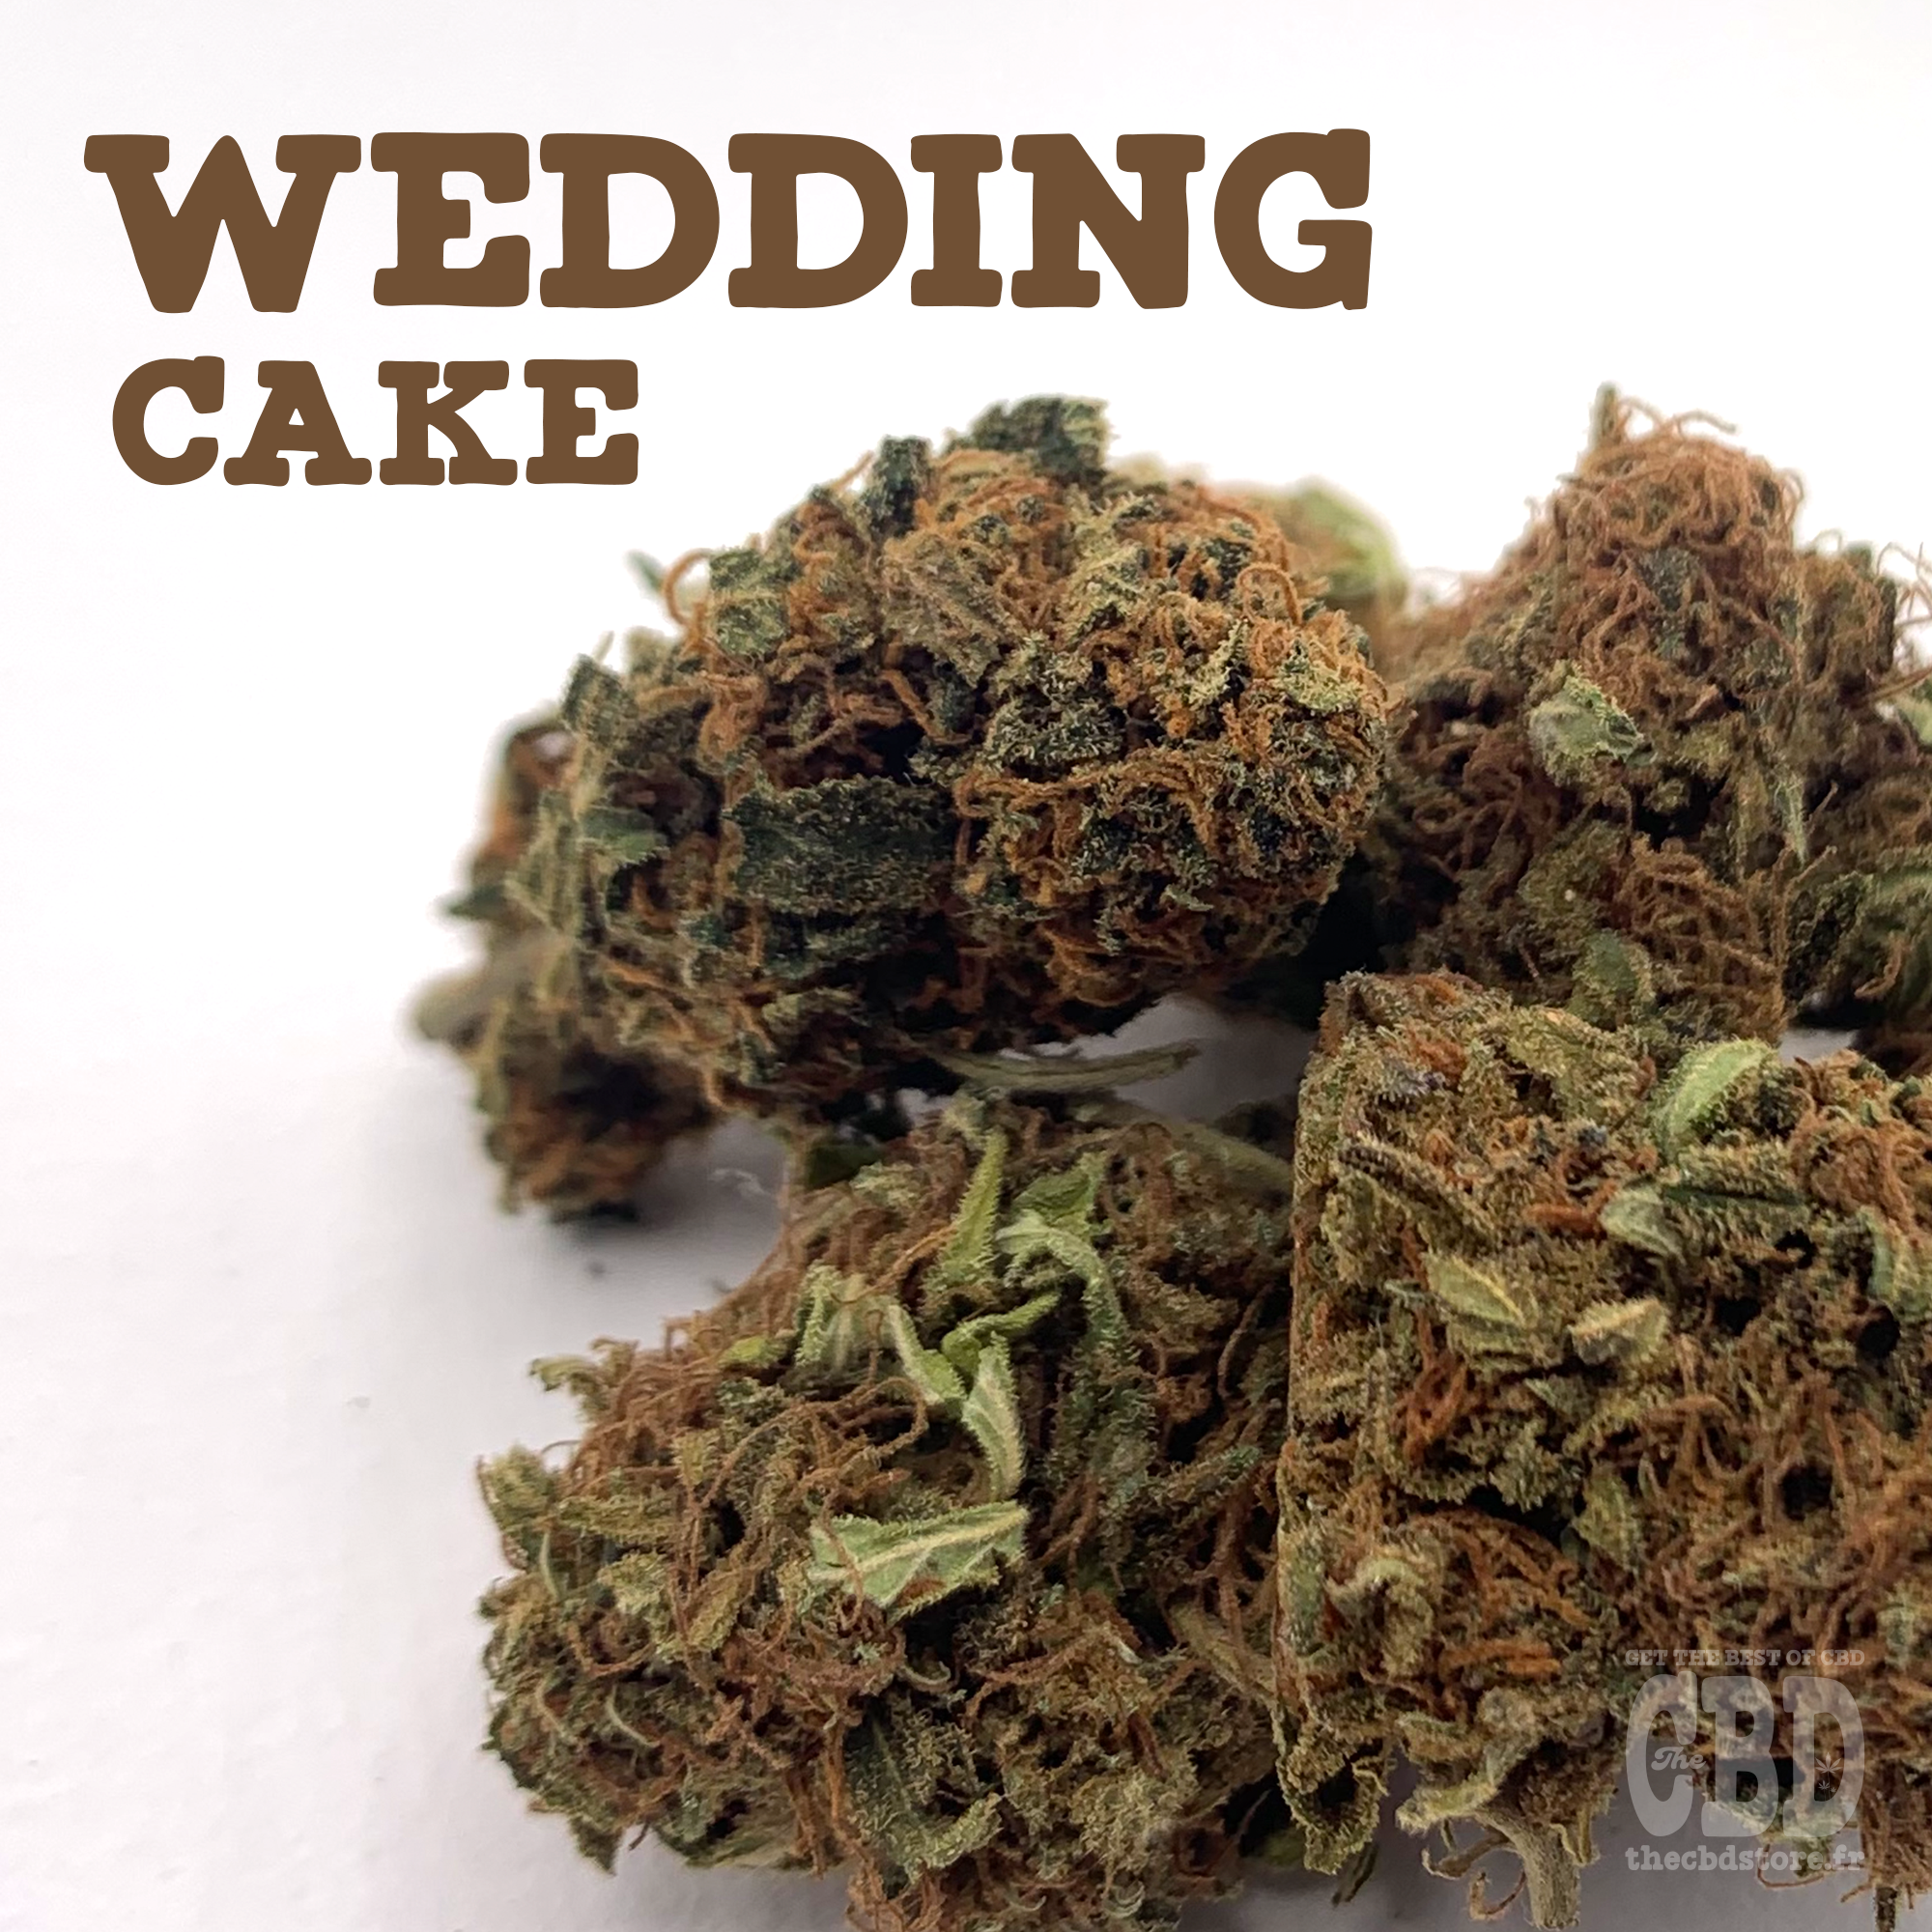 WEDDING CAKE - Fleurs CBD